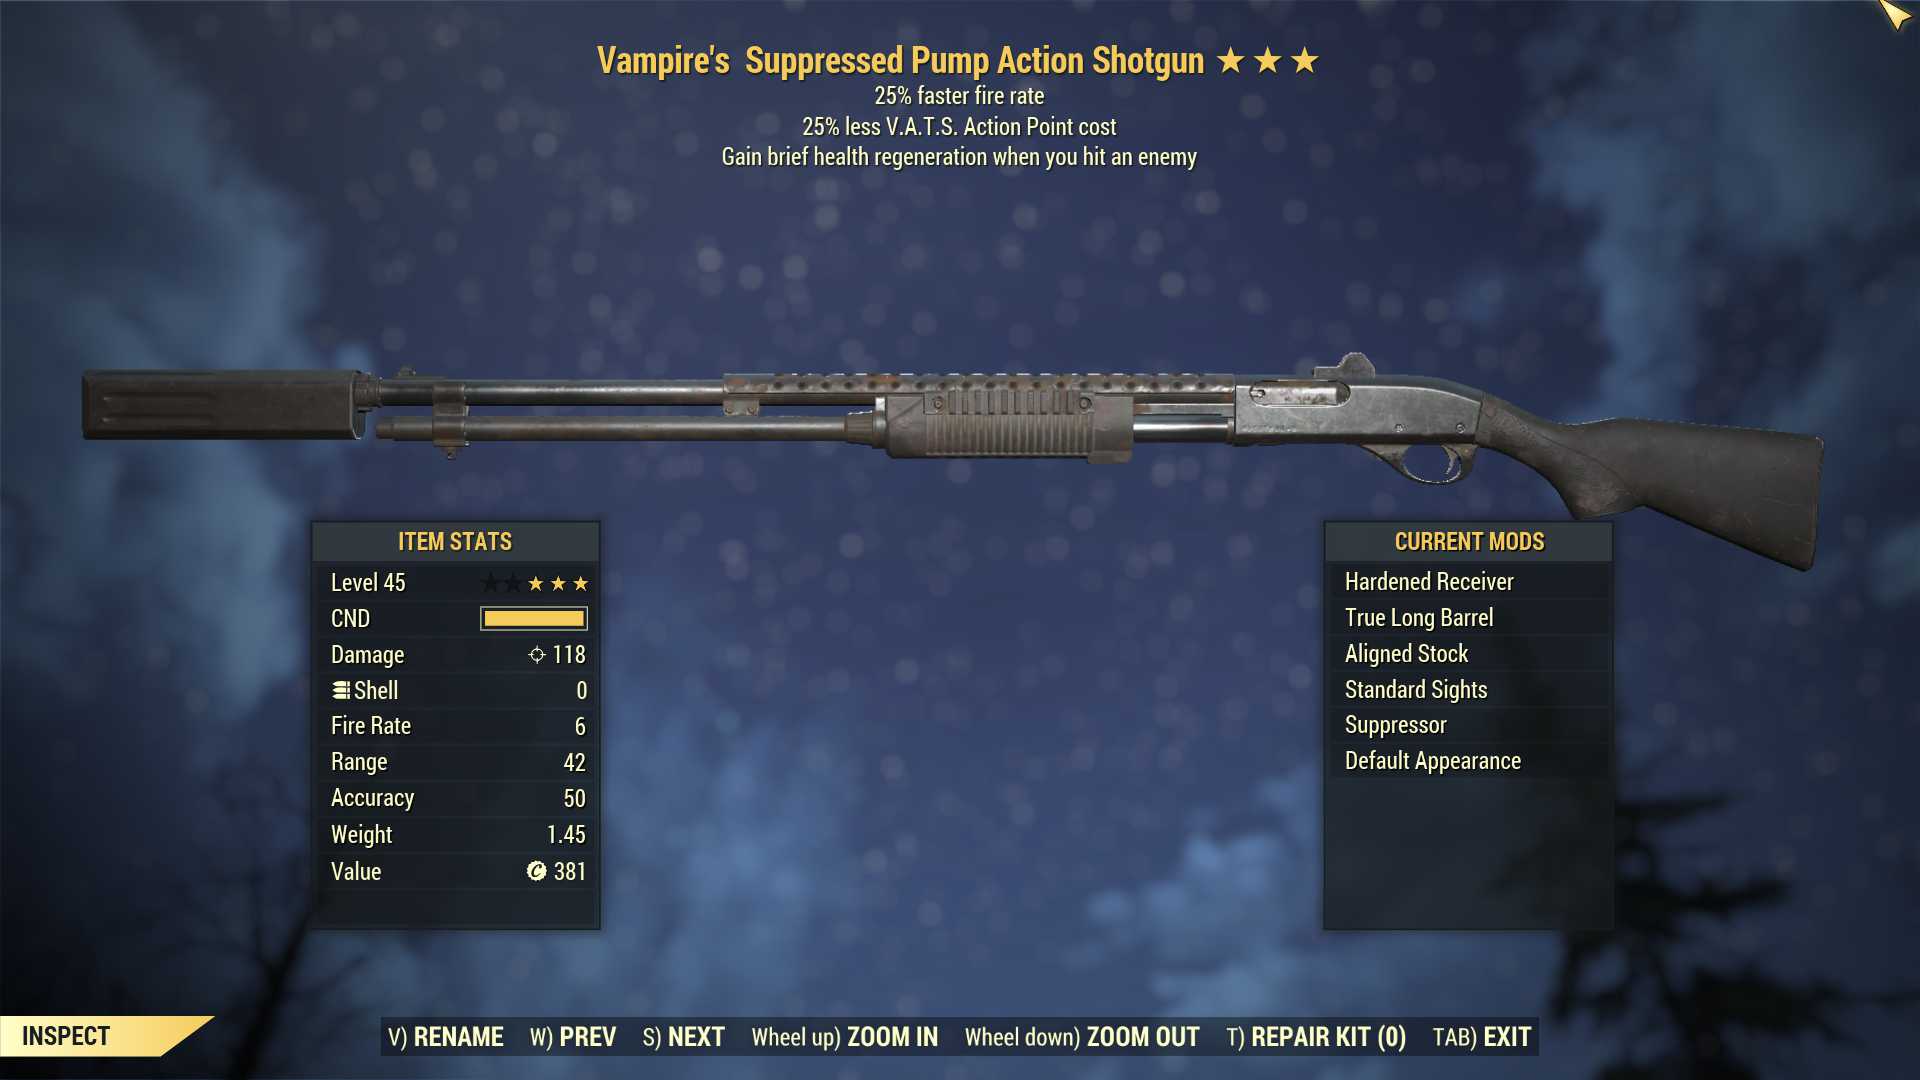 Vampire's Pump Action Shotgun (25% faster fire rate, 25% less VATS AP cost)